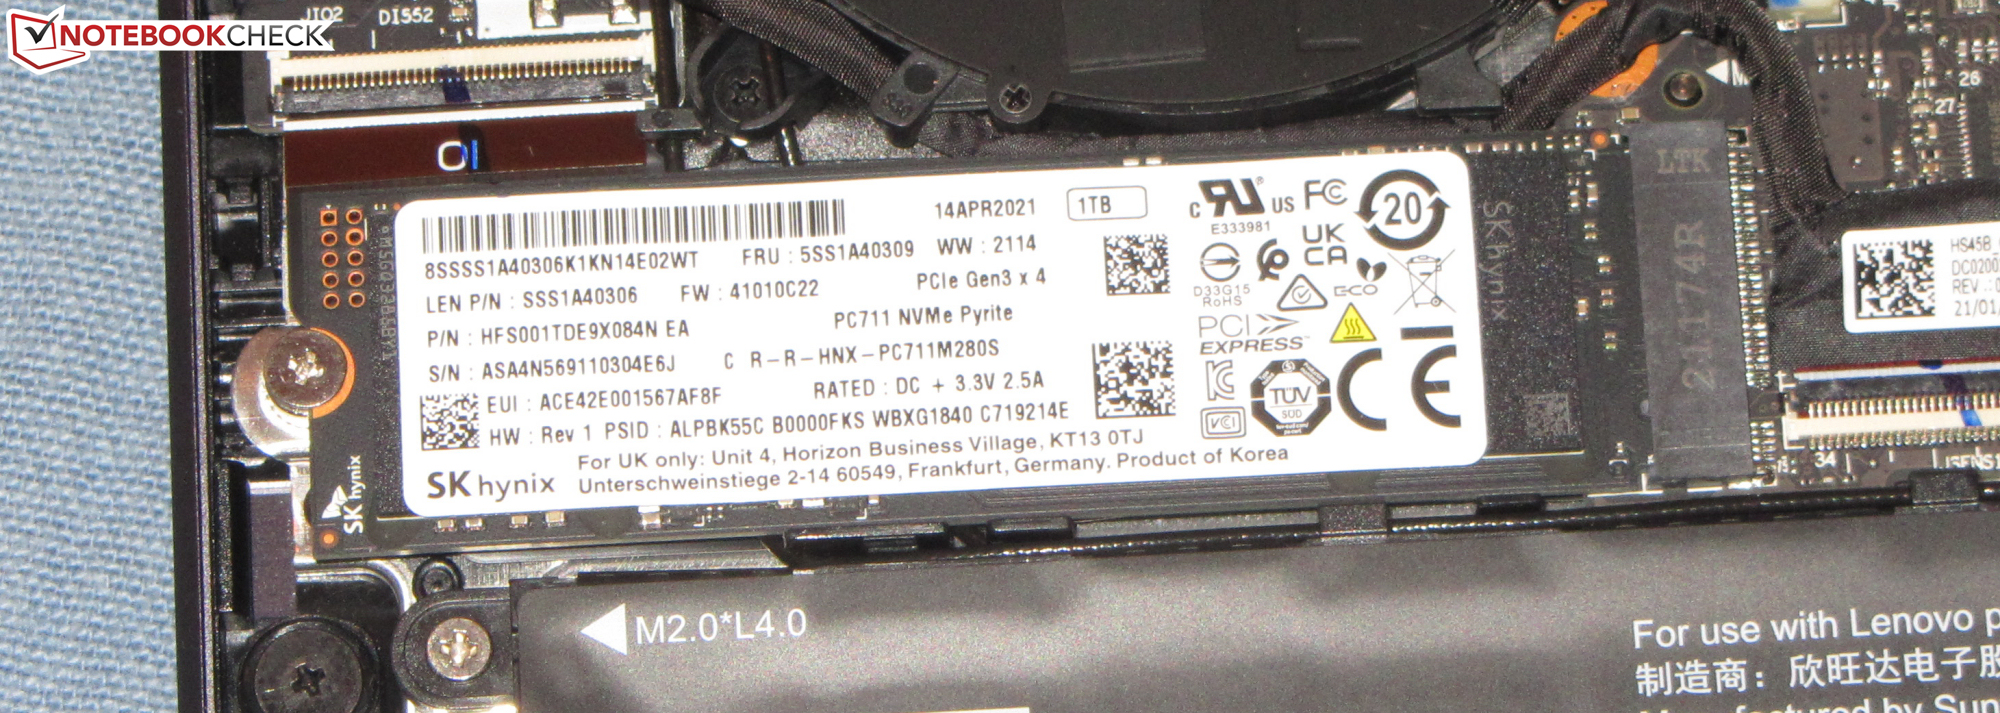 SK Hynix PC711 1TB HFS001TDE9X084N SSD Benchmarks - NotebookCheck